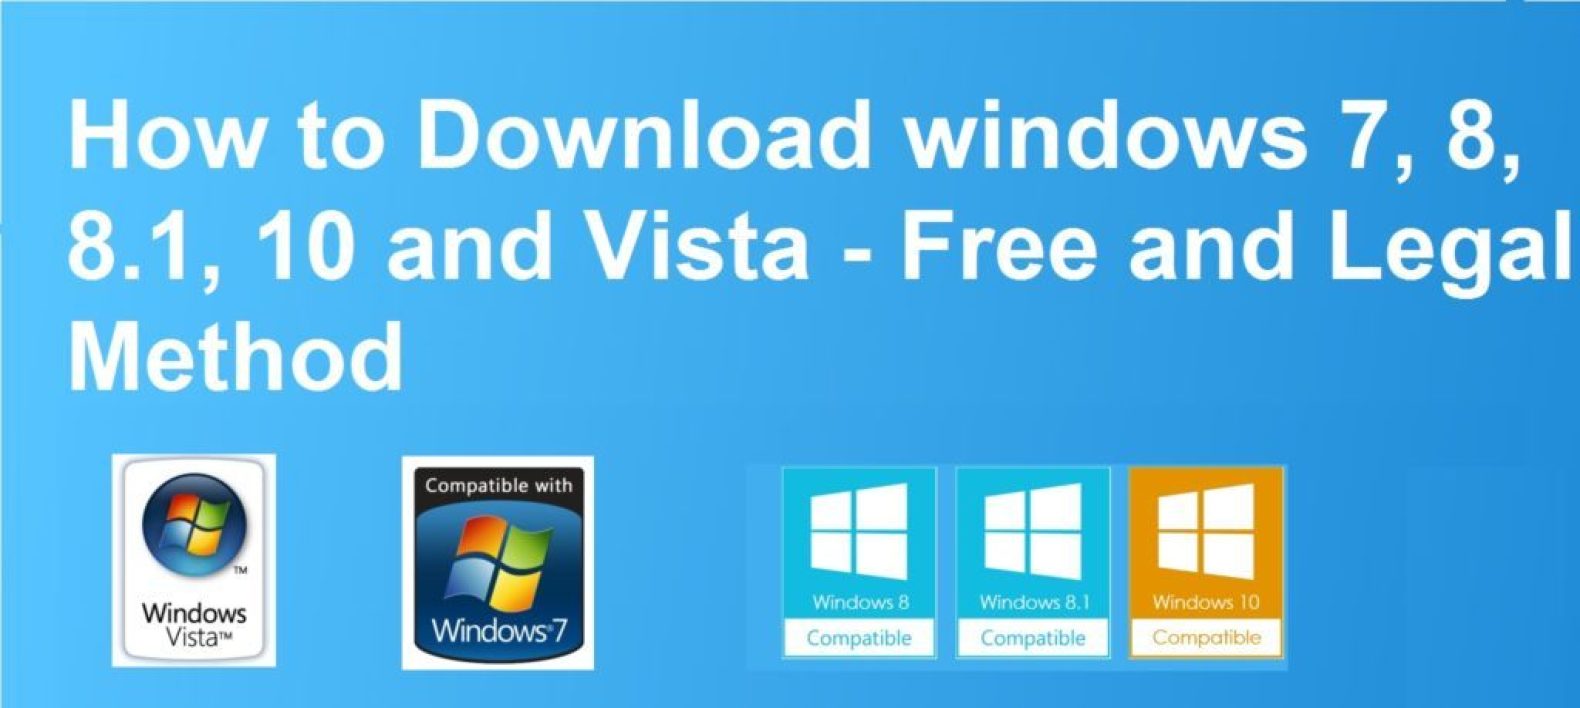 Free windows 7 software programs